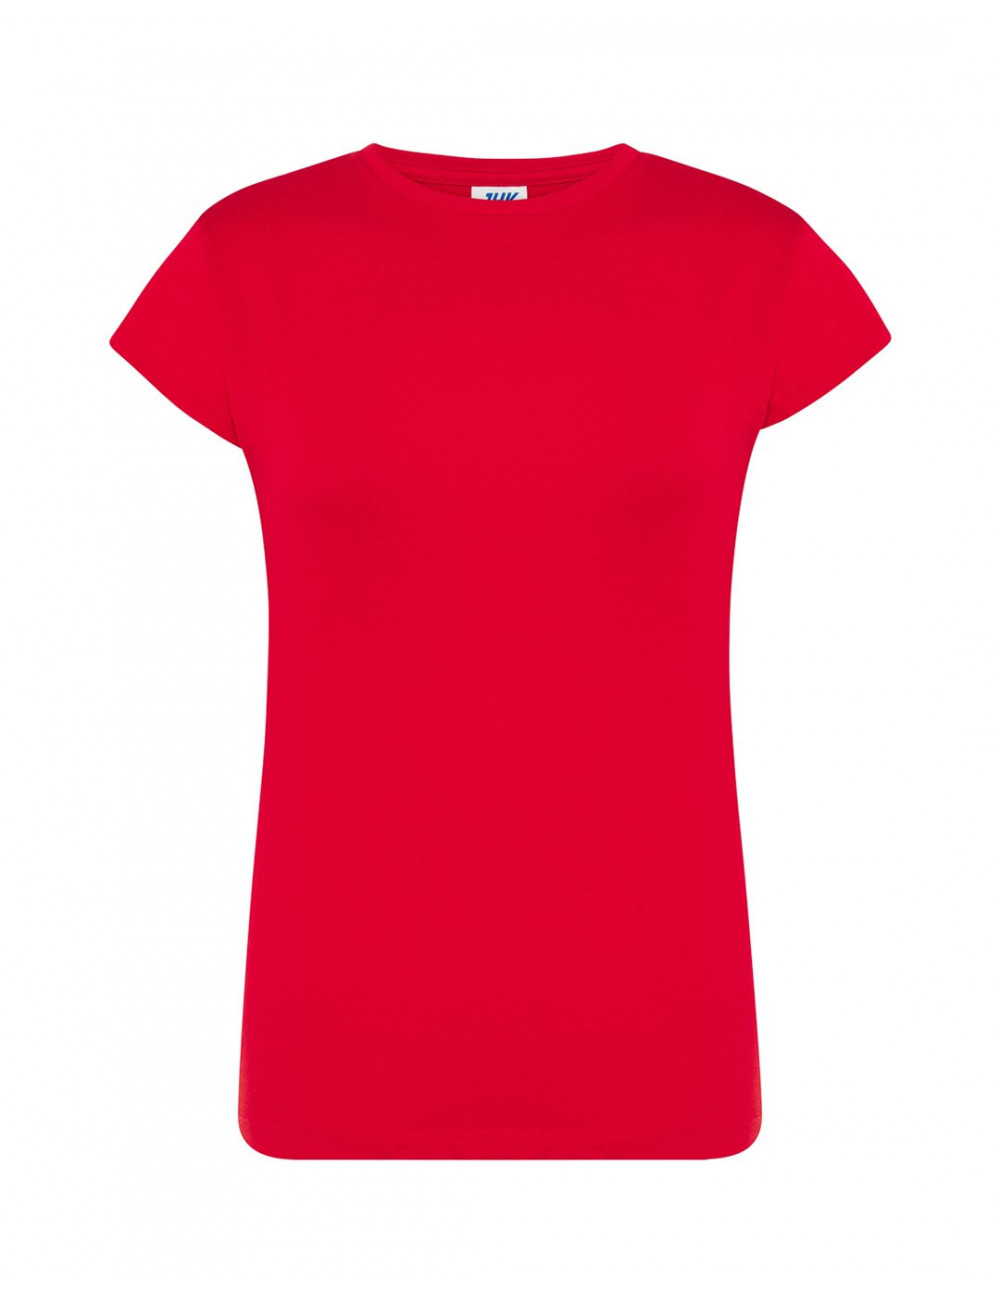 Women`s t-shirt tsrl prm lady premium red Jhk Jhk